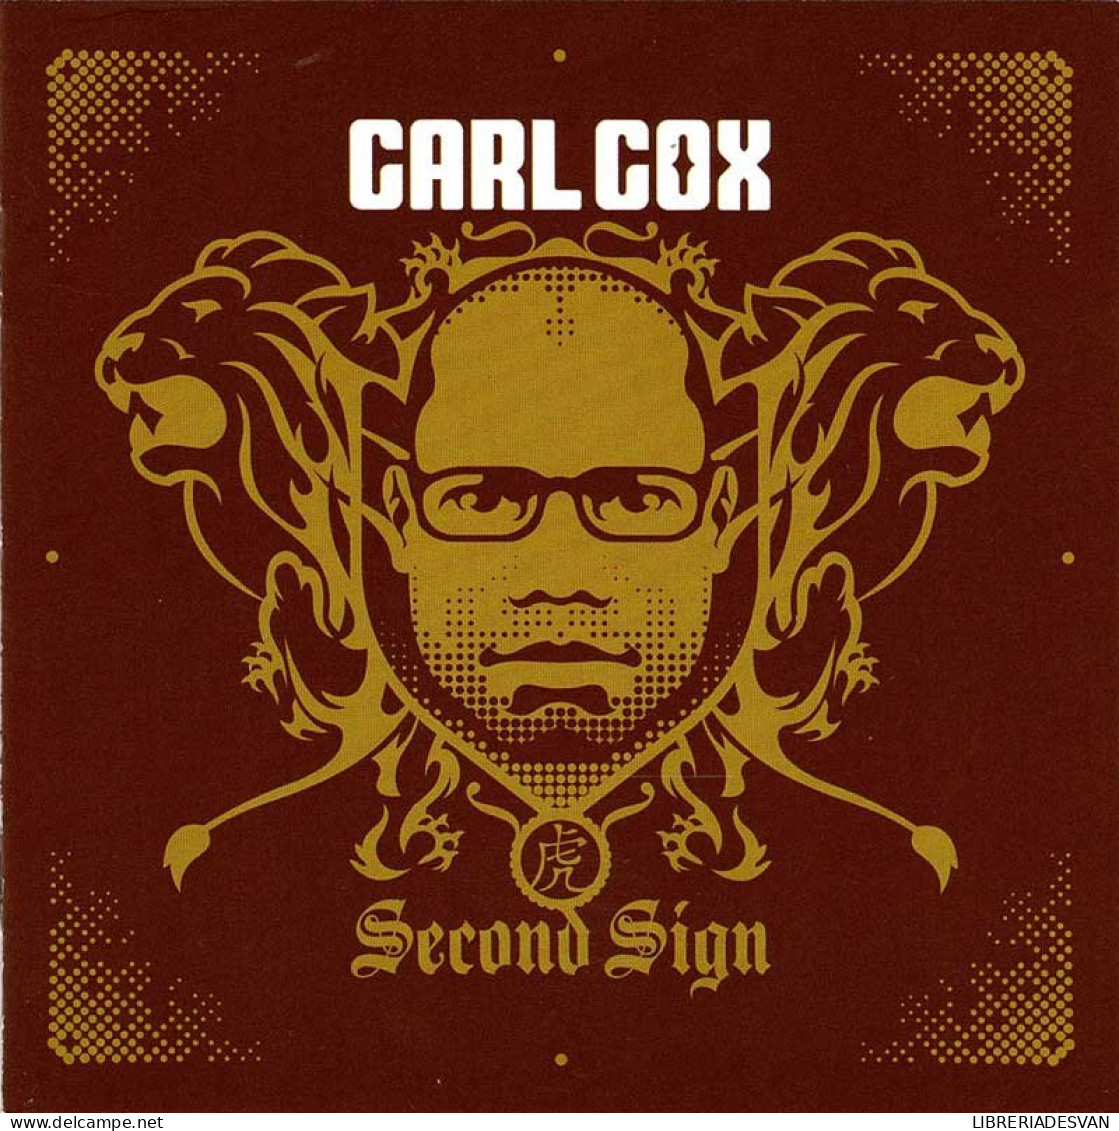 Carl Cox - Second Sign. CD - Dance, Techno En House